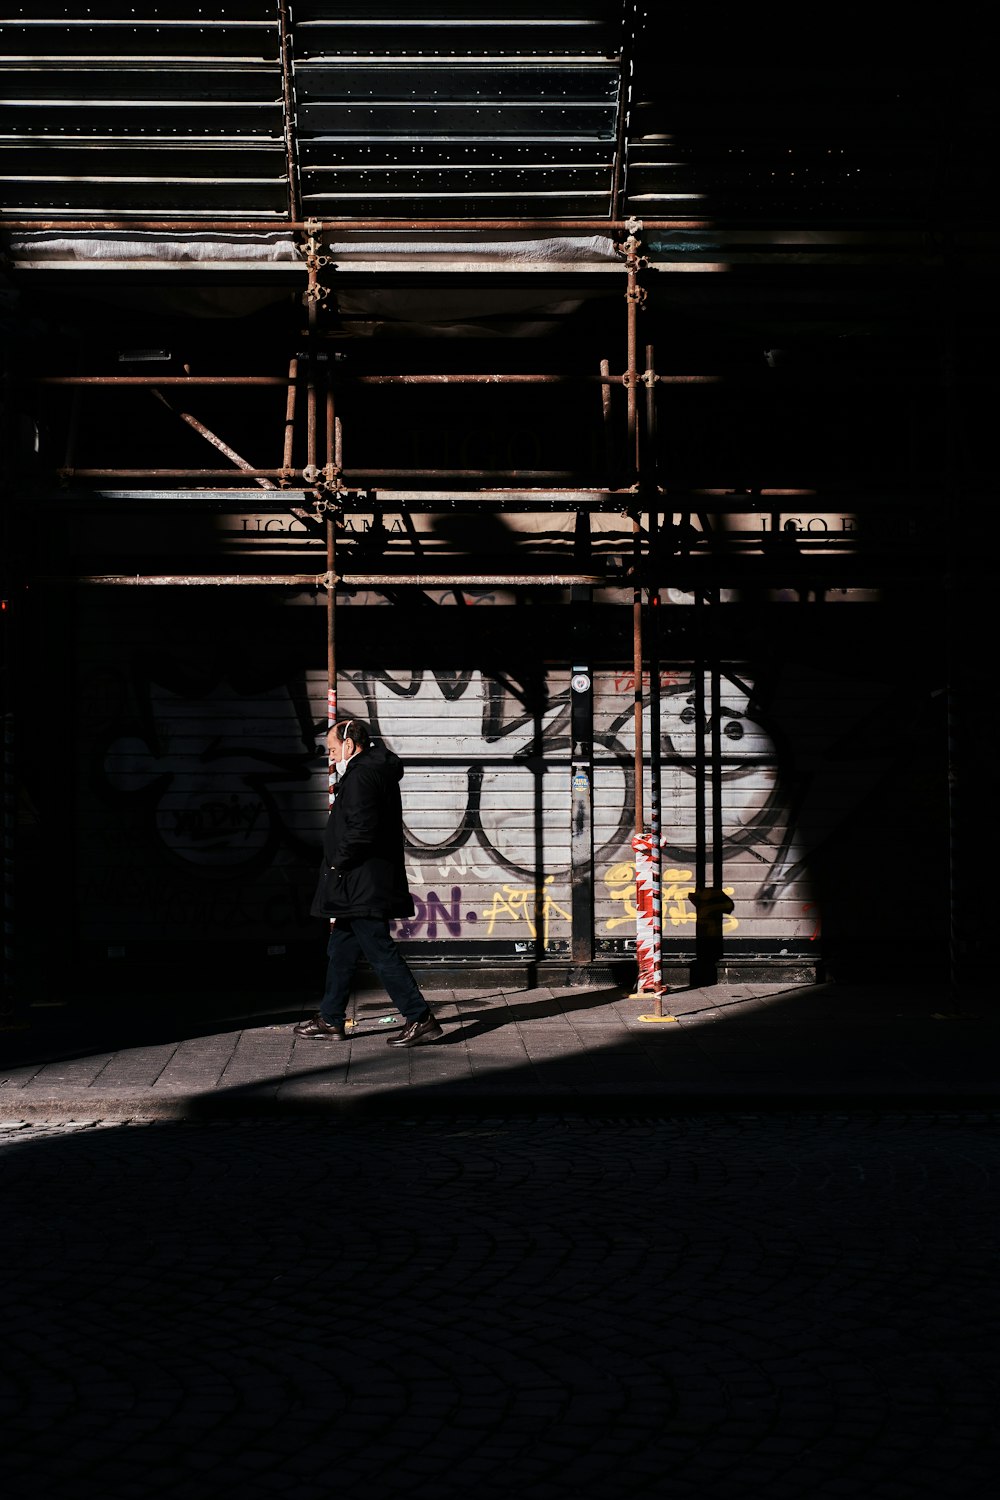 a man walking down a sidewalk next to a building